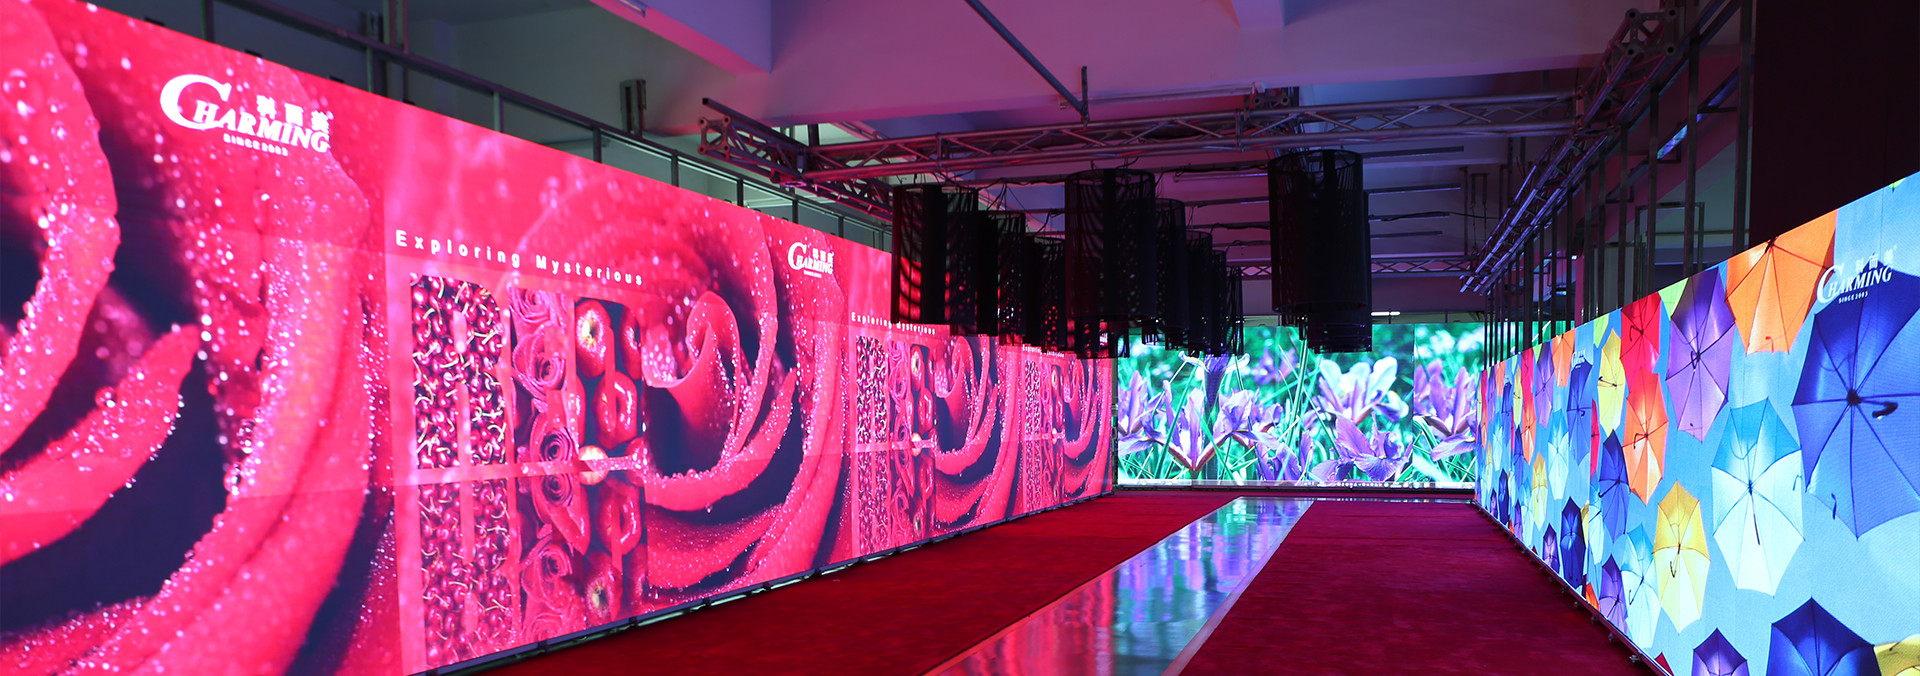 Qualidade Vídeo Wall Display de LED fábrica